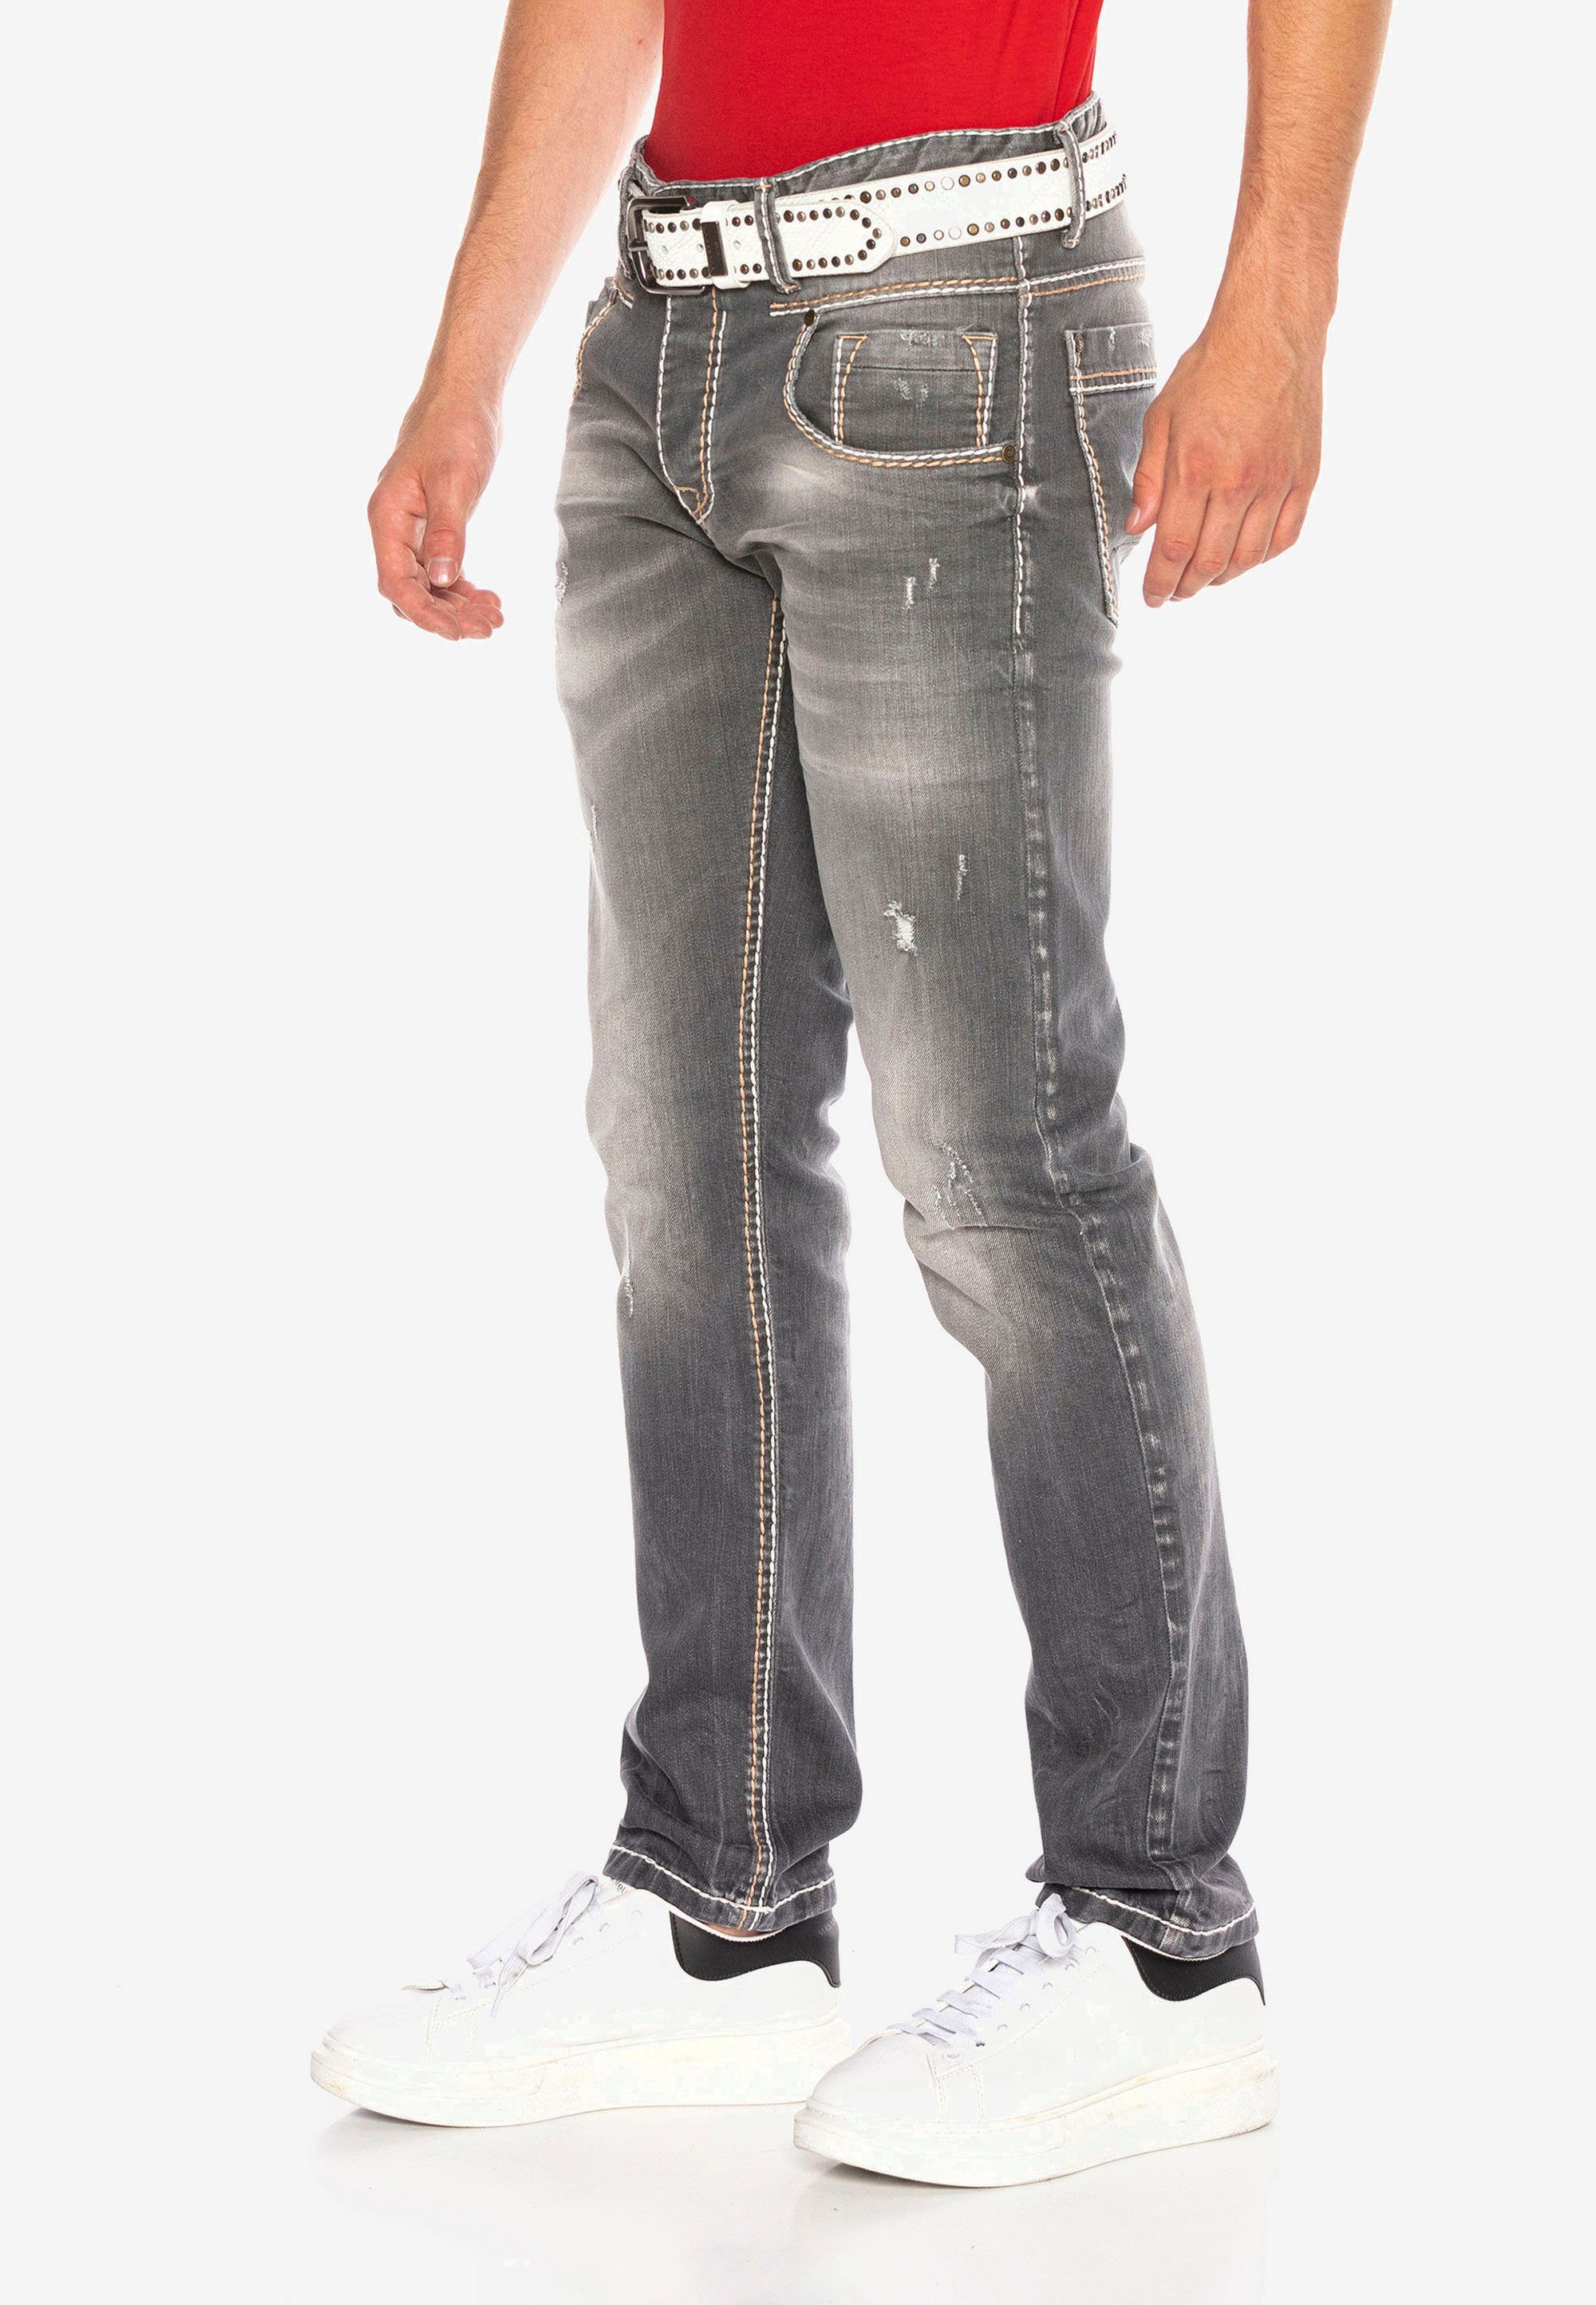 & Baxx in CD668 Jeans Straight modernem Cipo Bequeme Fit-Schnitt